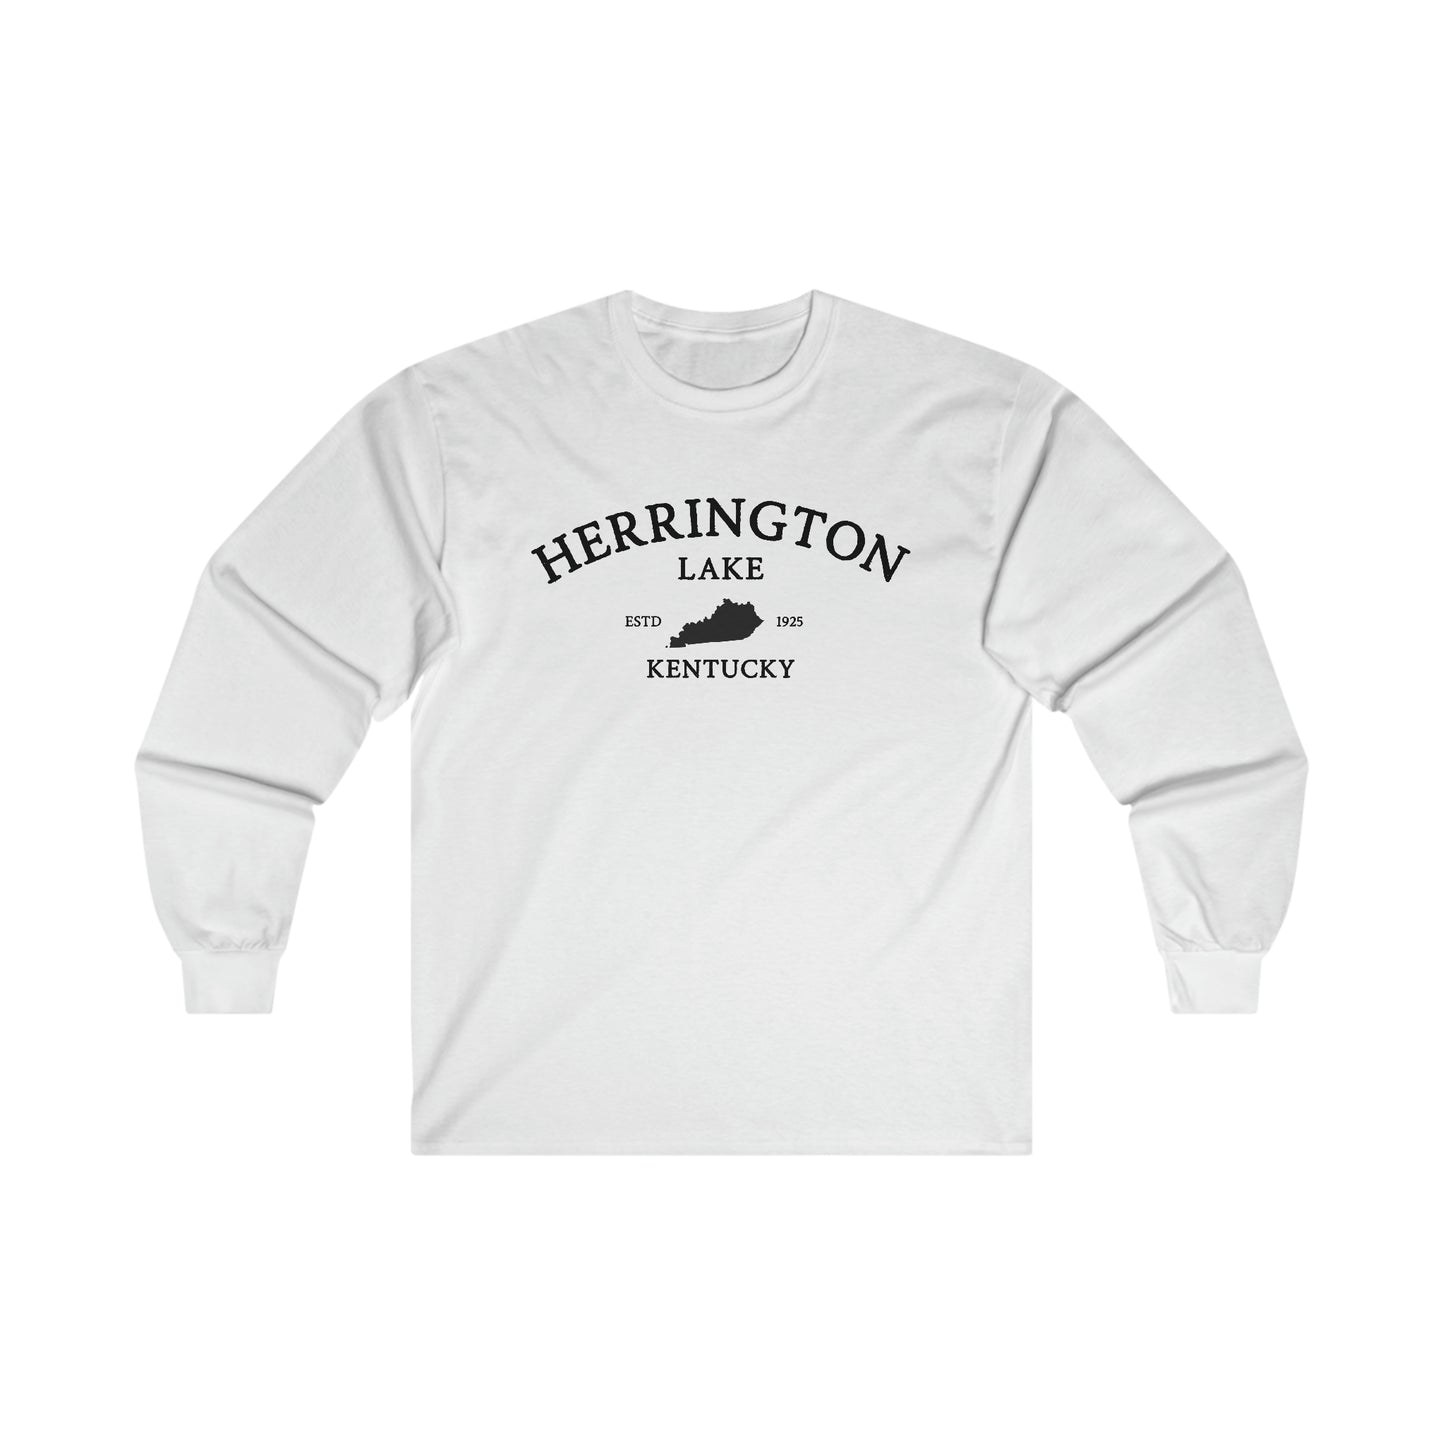 Simply Herrington Long Sleeve Ultra Cotten Tee